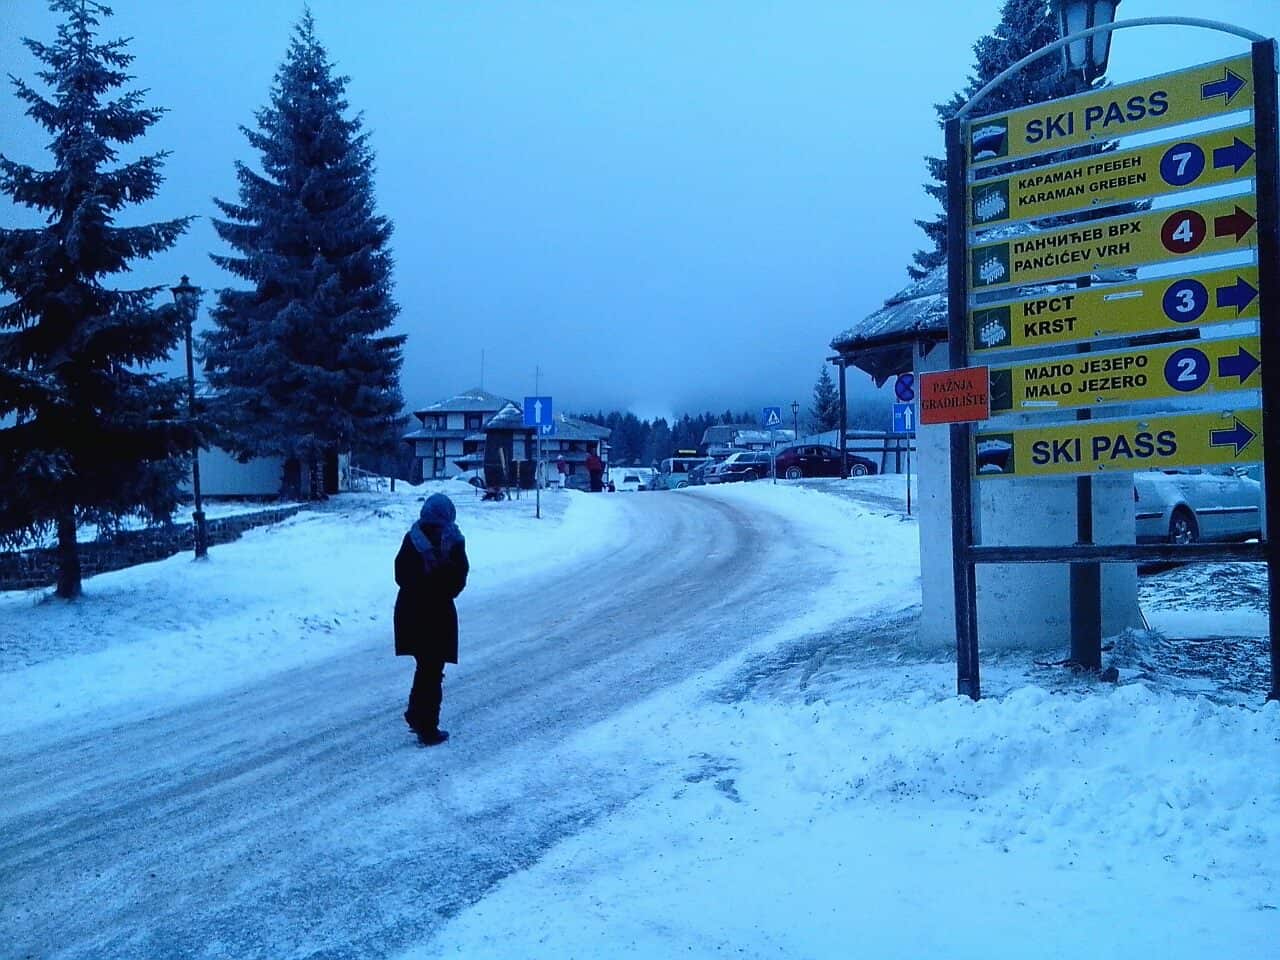 Izveštaj sa Kopaonika: Na Kopaoniku danas (21.12.2014.god) pada slab sneg, brzna vetra 4 m/s, visina snežnog pokrivača van staza 3 cm, temperatura -5 C,